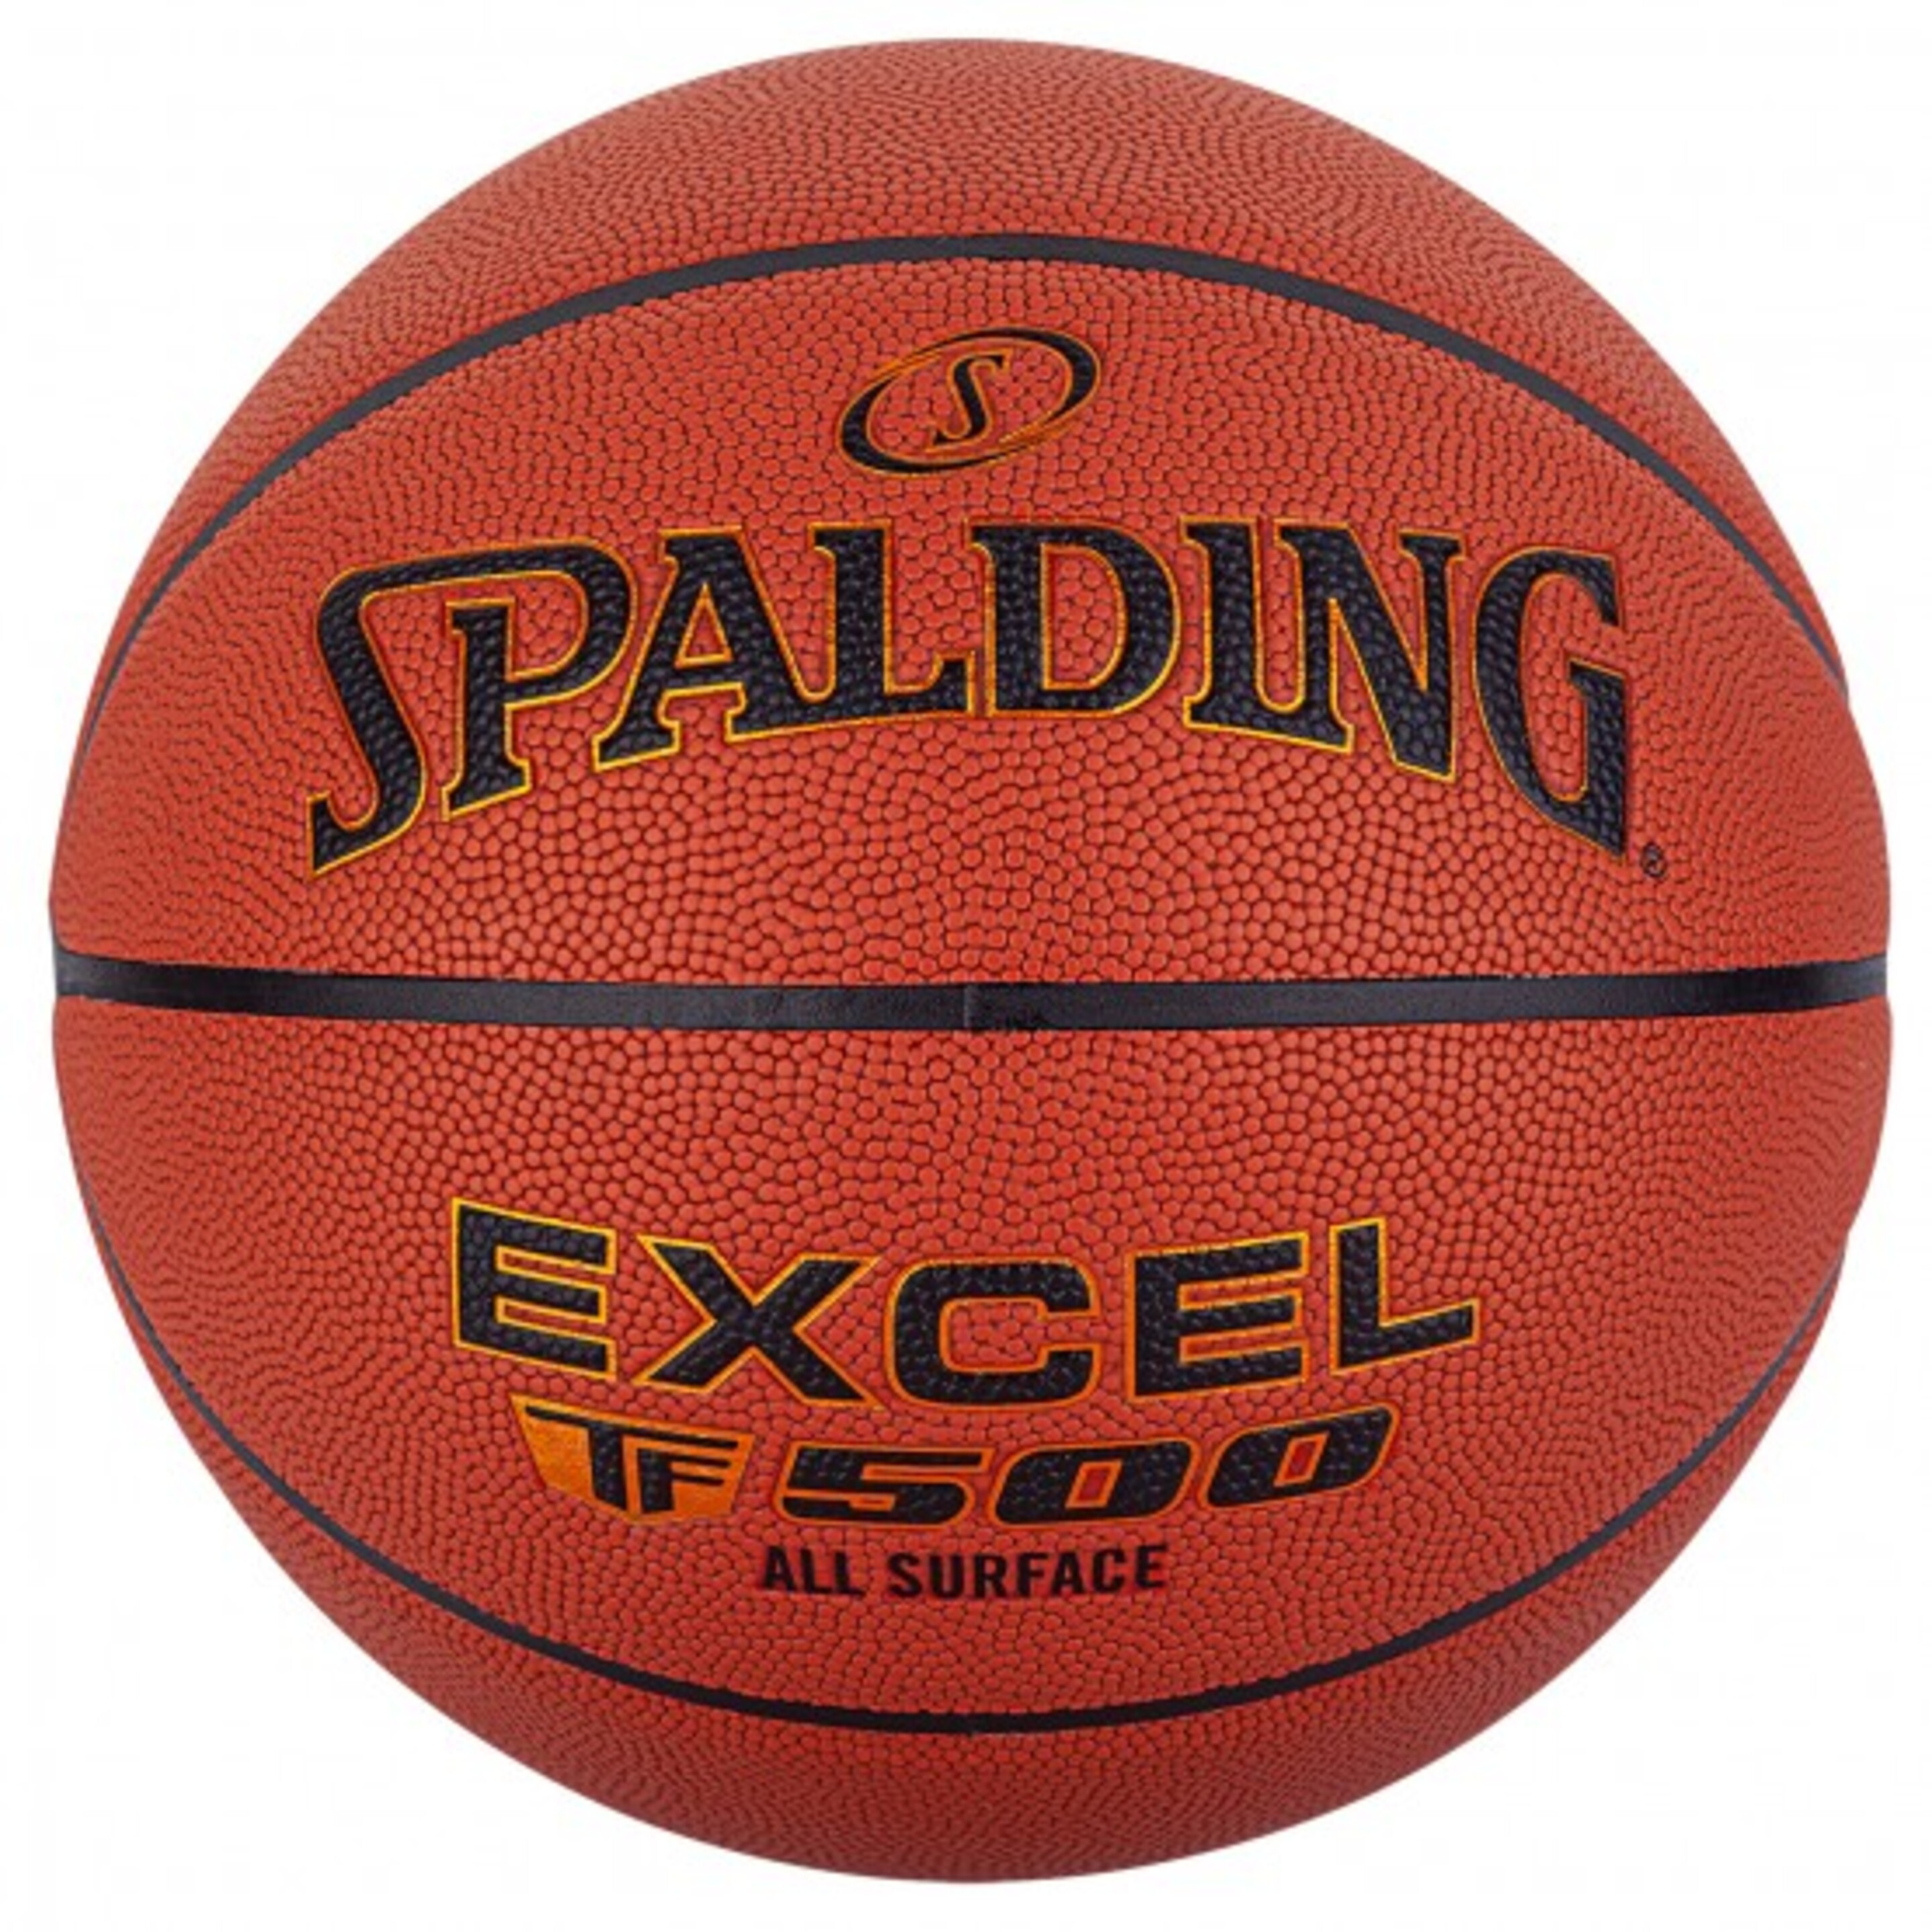 Balón De Baloncesto Spalding Excel Tf-500 Sz6. Piel - naranja - 